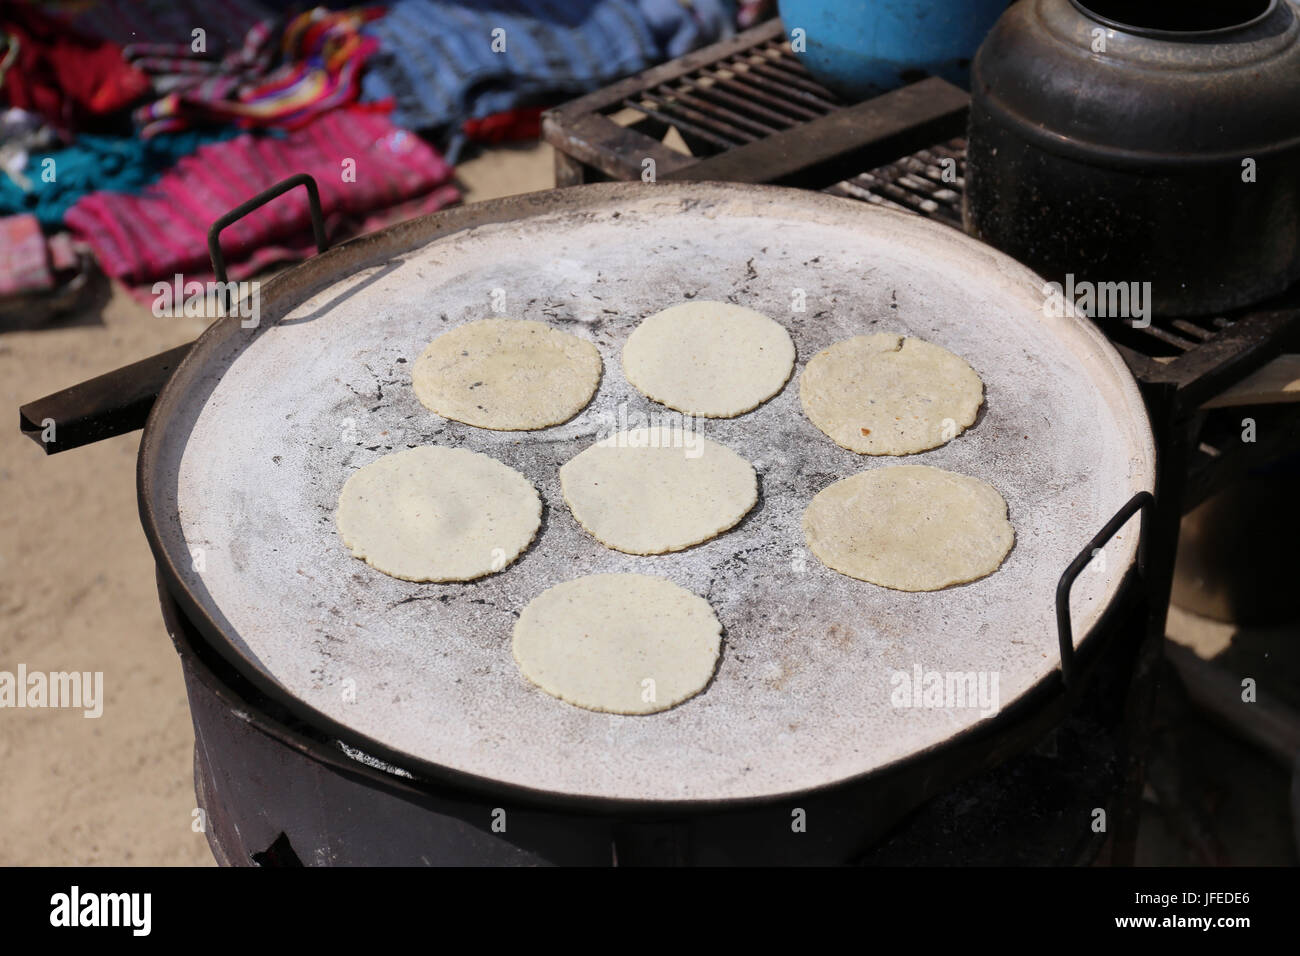 https://c8.alamy.com/comp/JFEDE6/baking-tortillas-on-the-fire-guatemalan-pupusas-JFEDE6.jpg